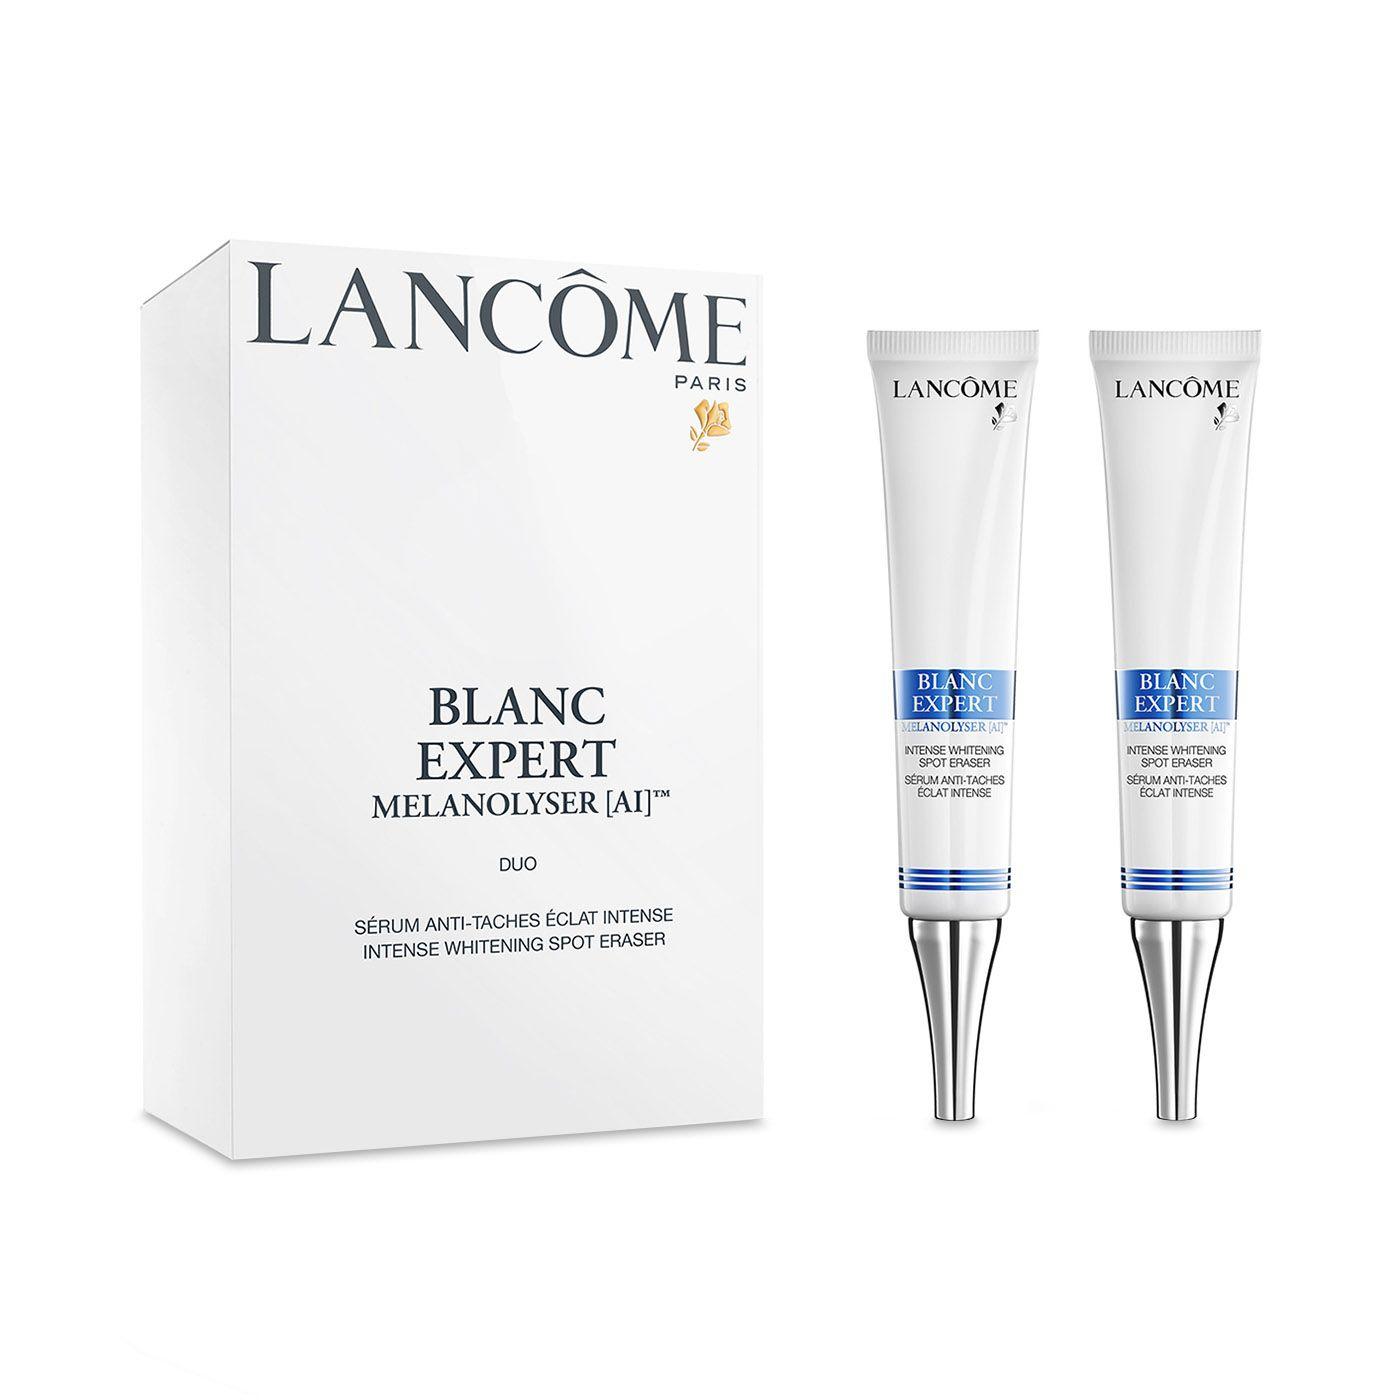 Lancome Paris Logo - Kingpower - Lancome - travel-exclusive-skincare